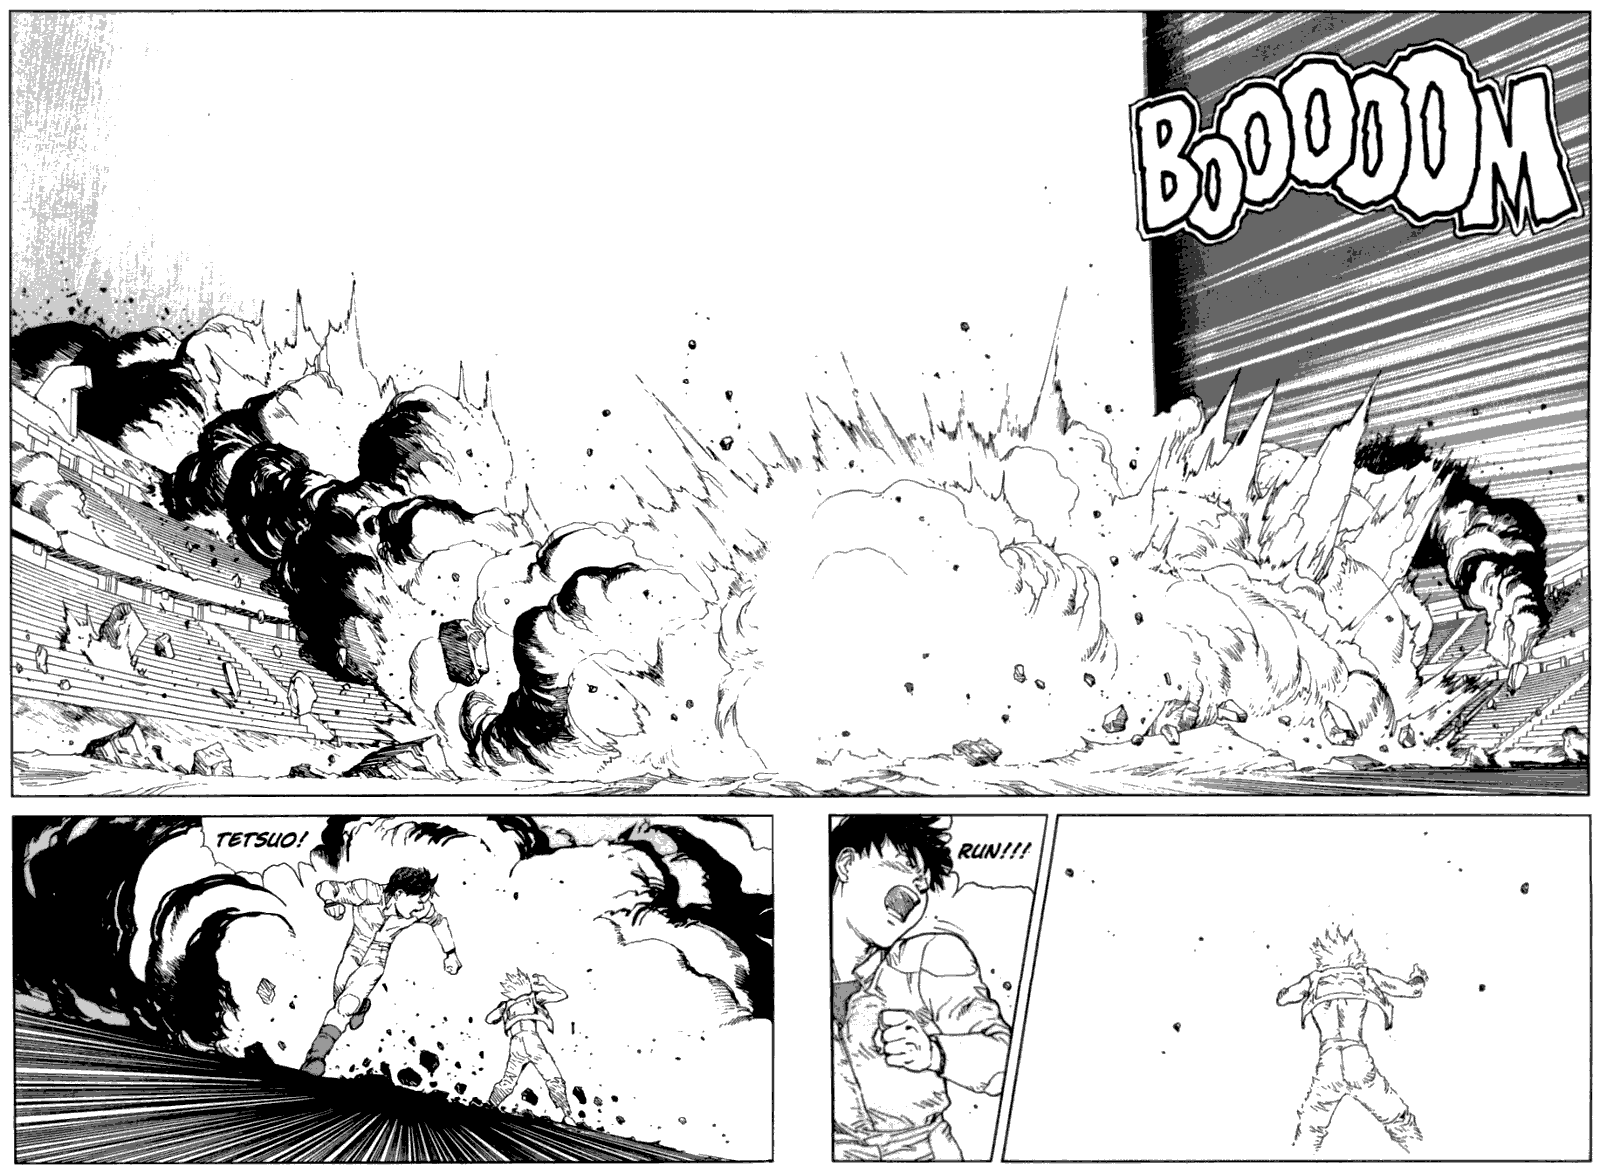 page 144 of akira volume 6 manga at read graphic novel online